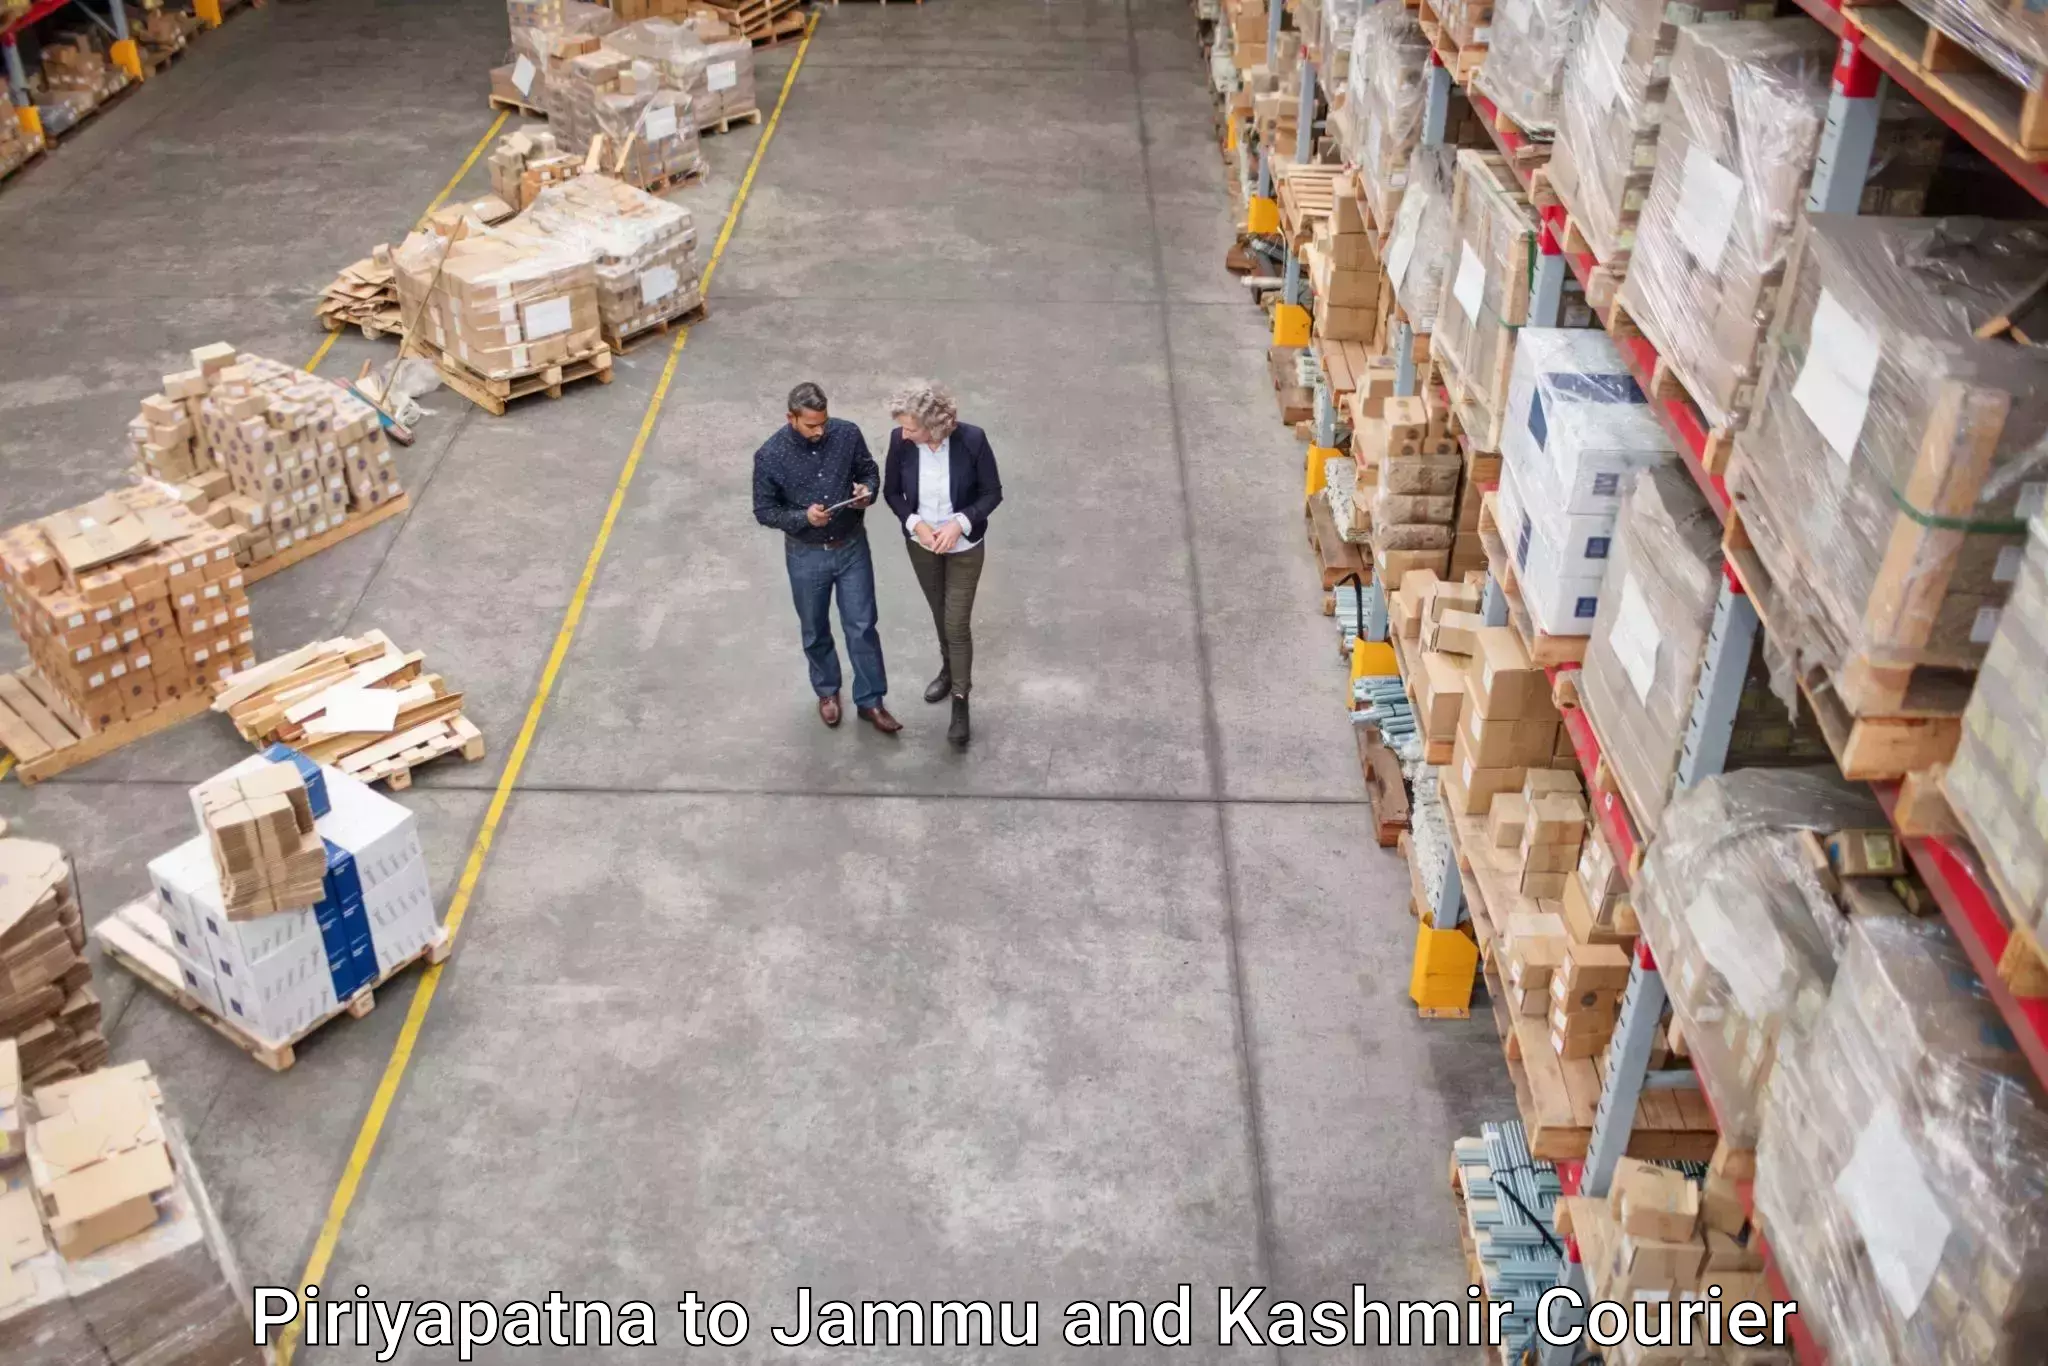 Professional courier handling in Piriyapatna to Jammu and Kashmir